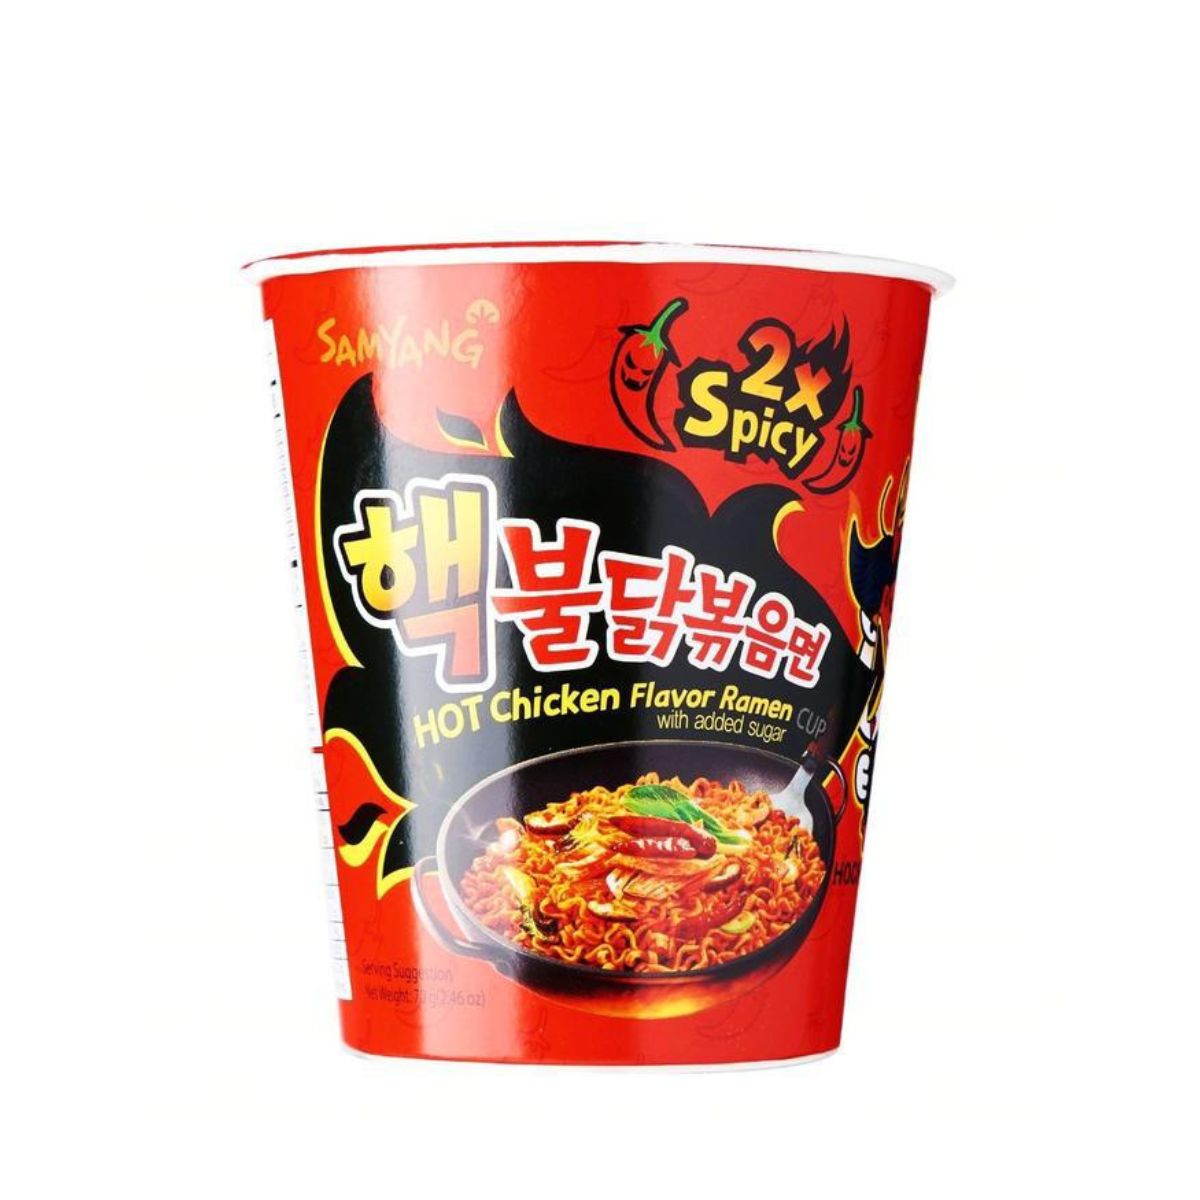 Samyang 2x Spicy Cup Noodles - Buldak Hot Chicken Flavor Ramen - 70g